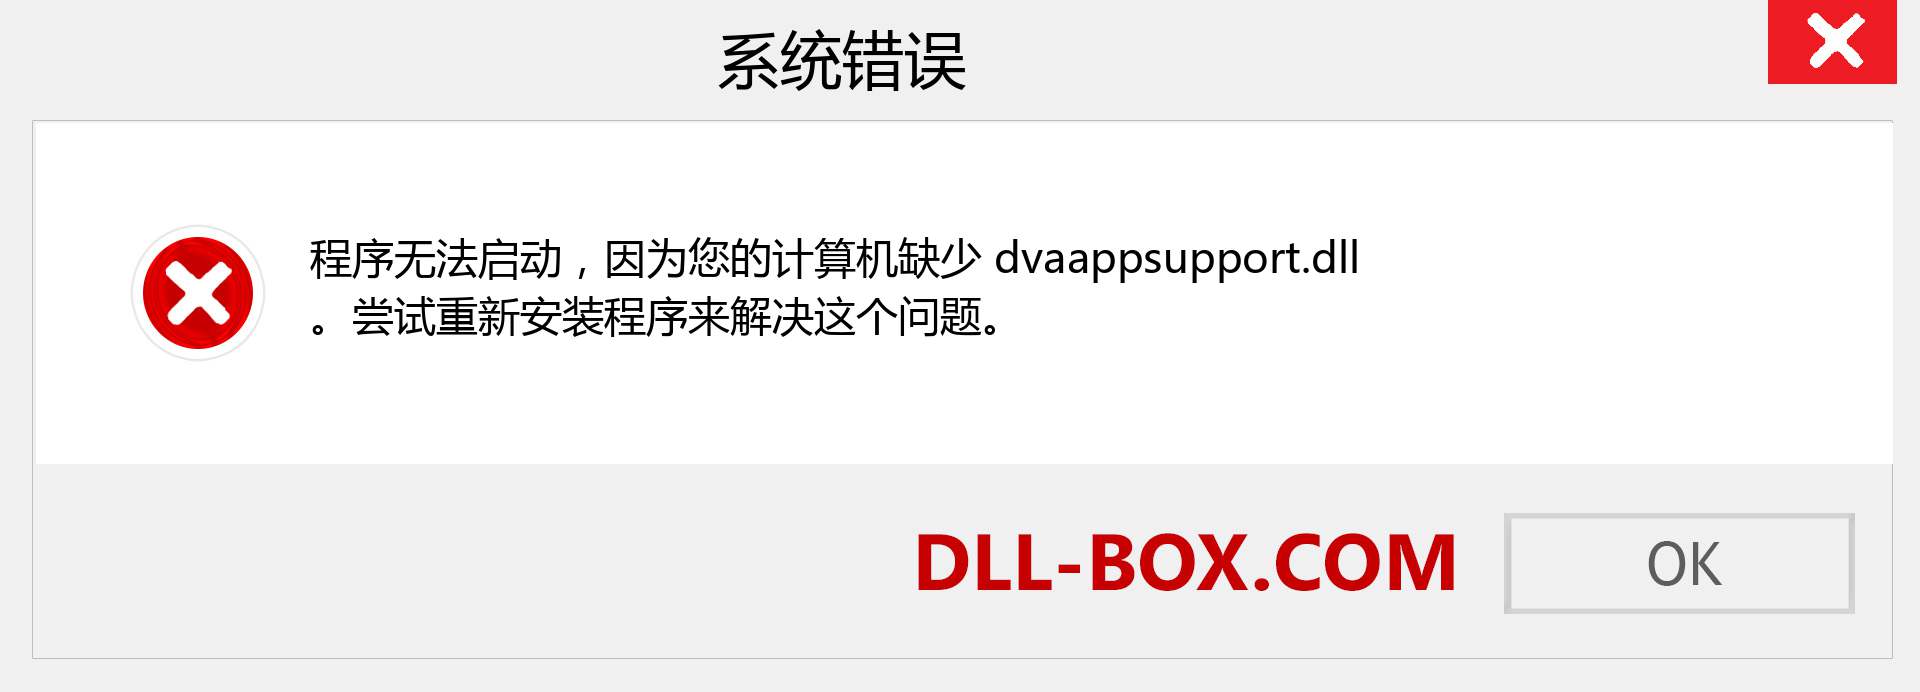 dvaappsupport.dll 文件丢失？。 适用于 Windows 7、8、10 的下载 - 修复 Windows、照片、图像上的 dvaappsupport dll 丢失错误